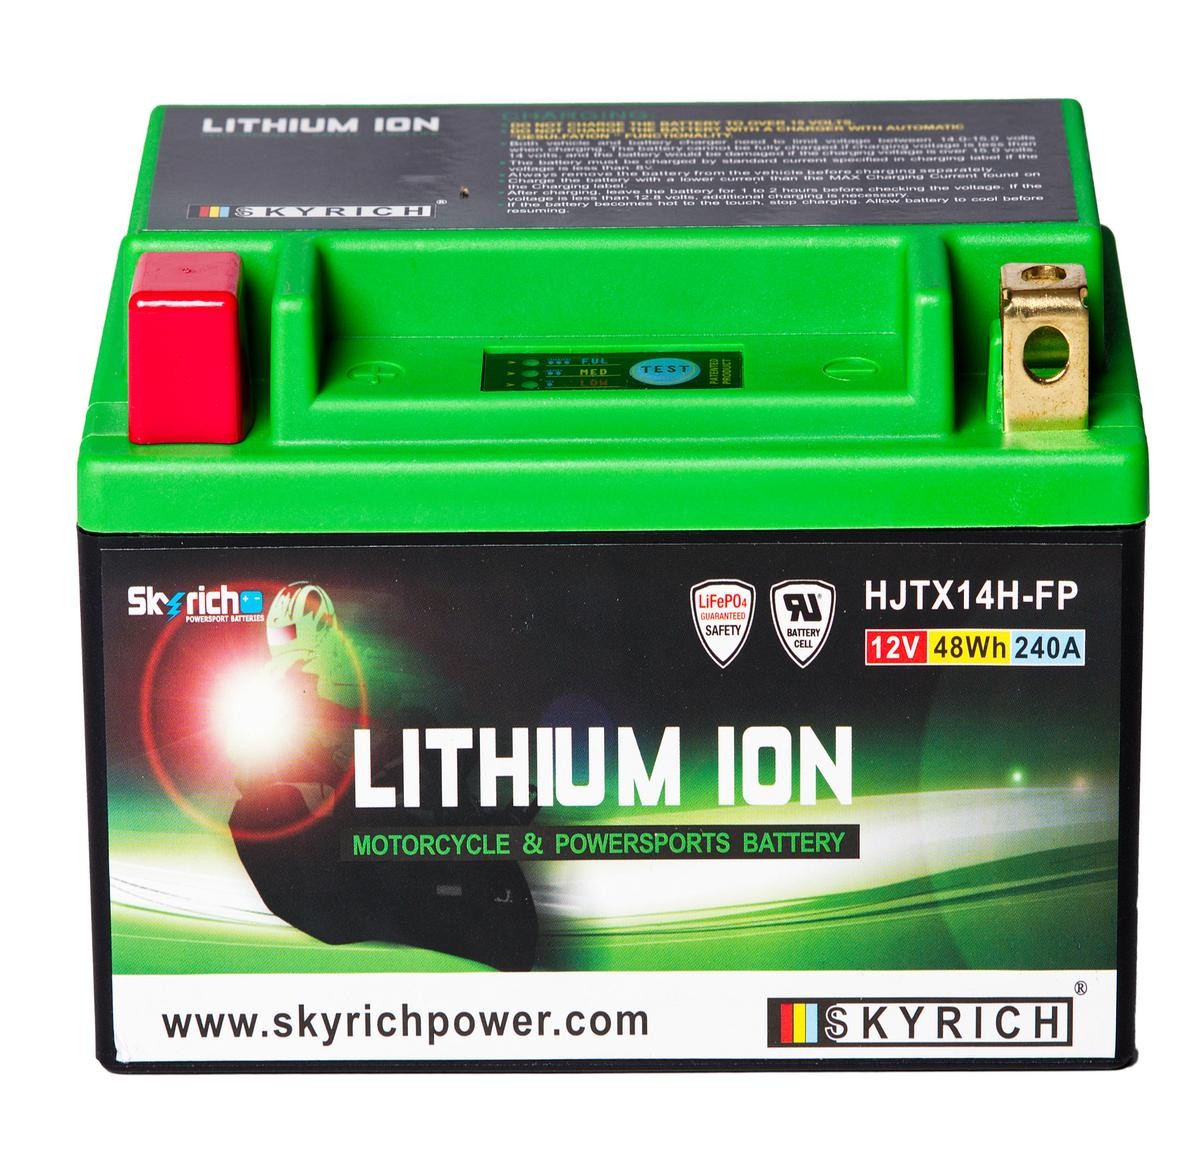 TRIUMPH SPEED Batterie 12V 4Ah 240A N Li-Ionen-Batterie SKYRICH LITHIUM ION HJTX14H-FP